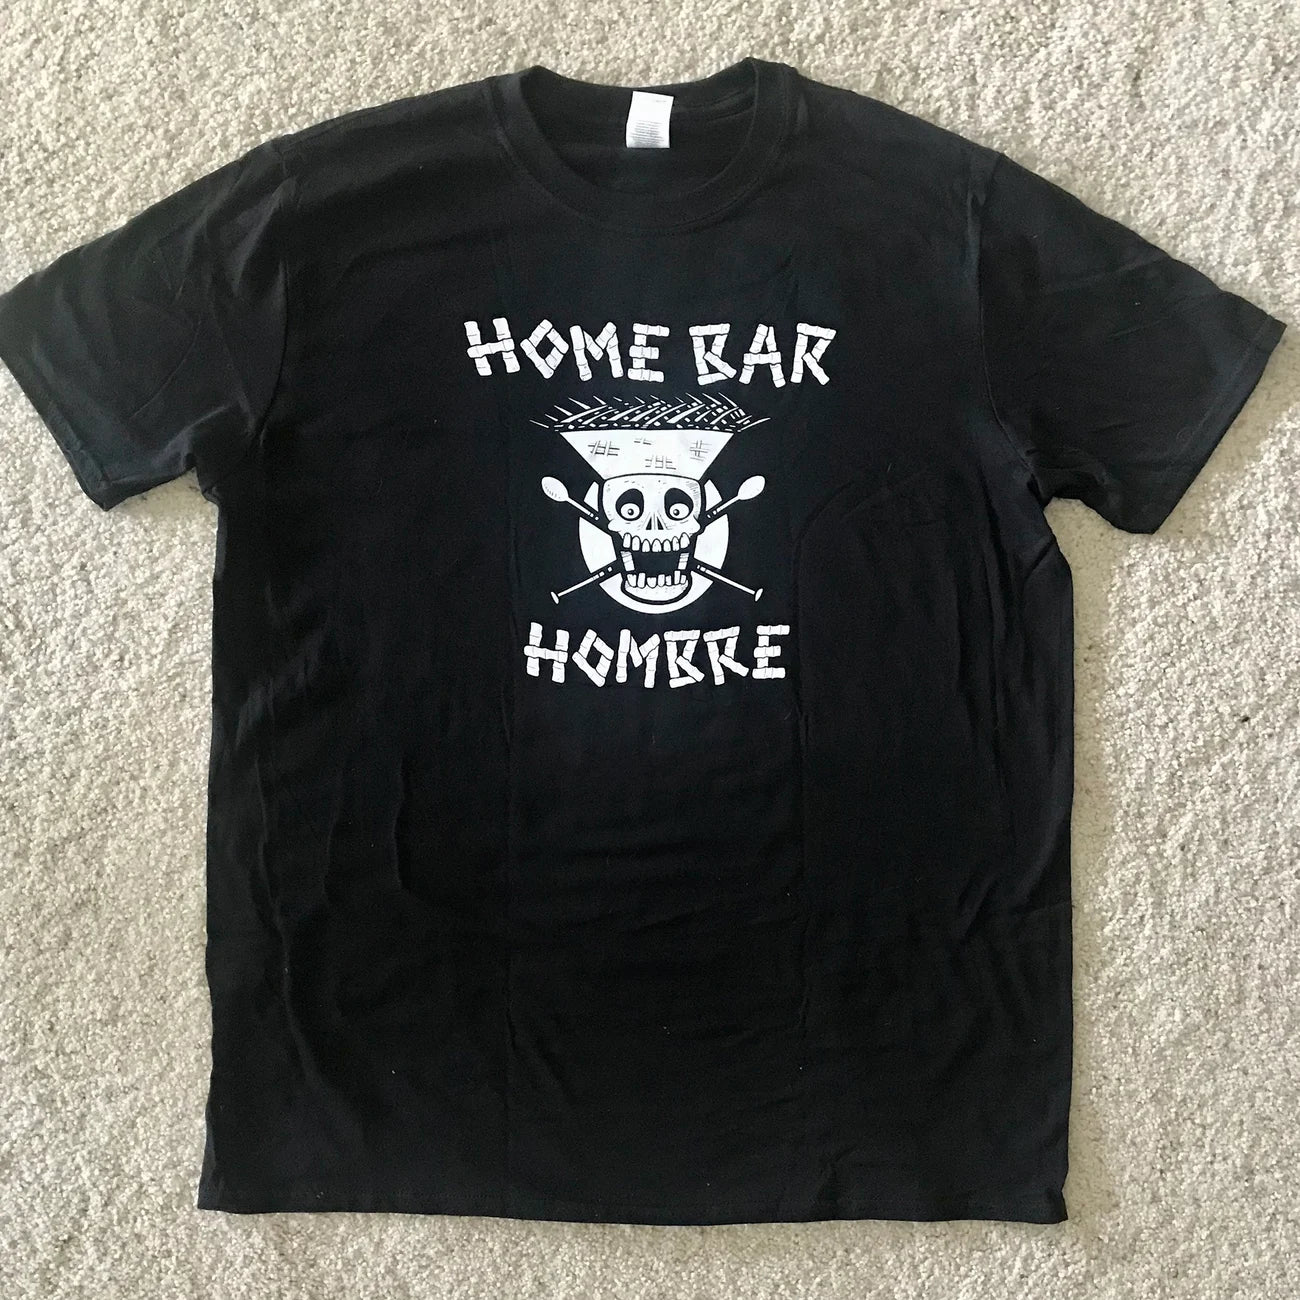 Home Bar Hombre shirt